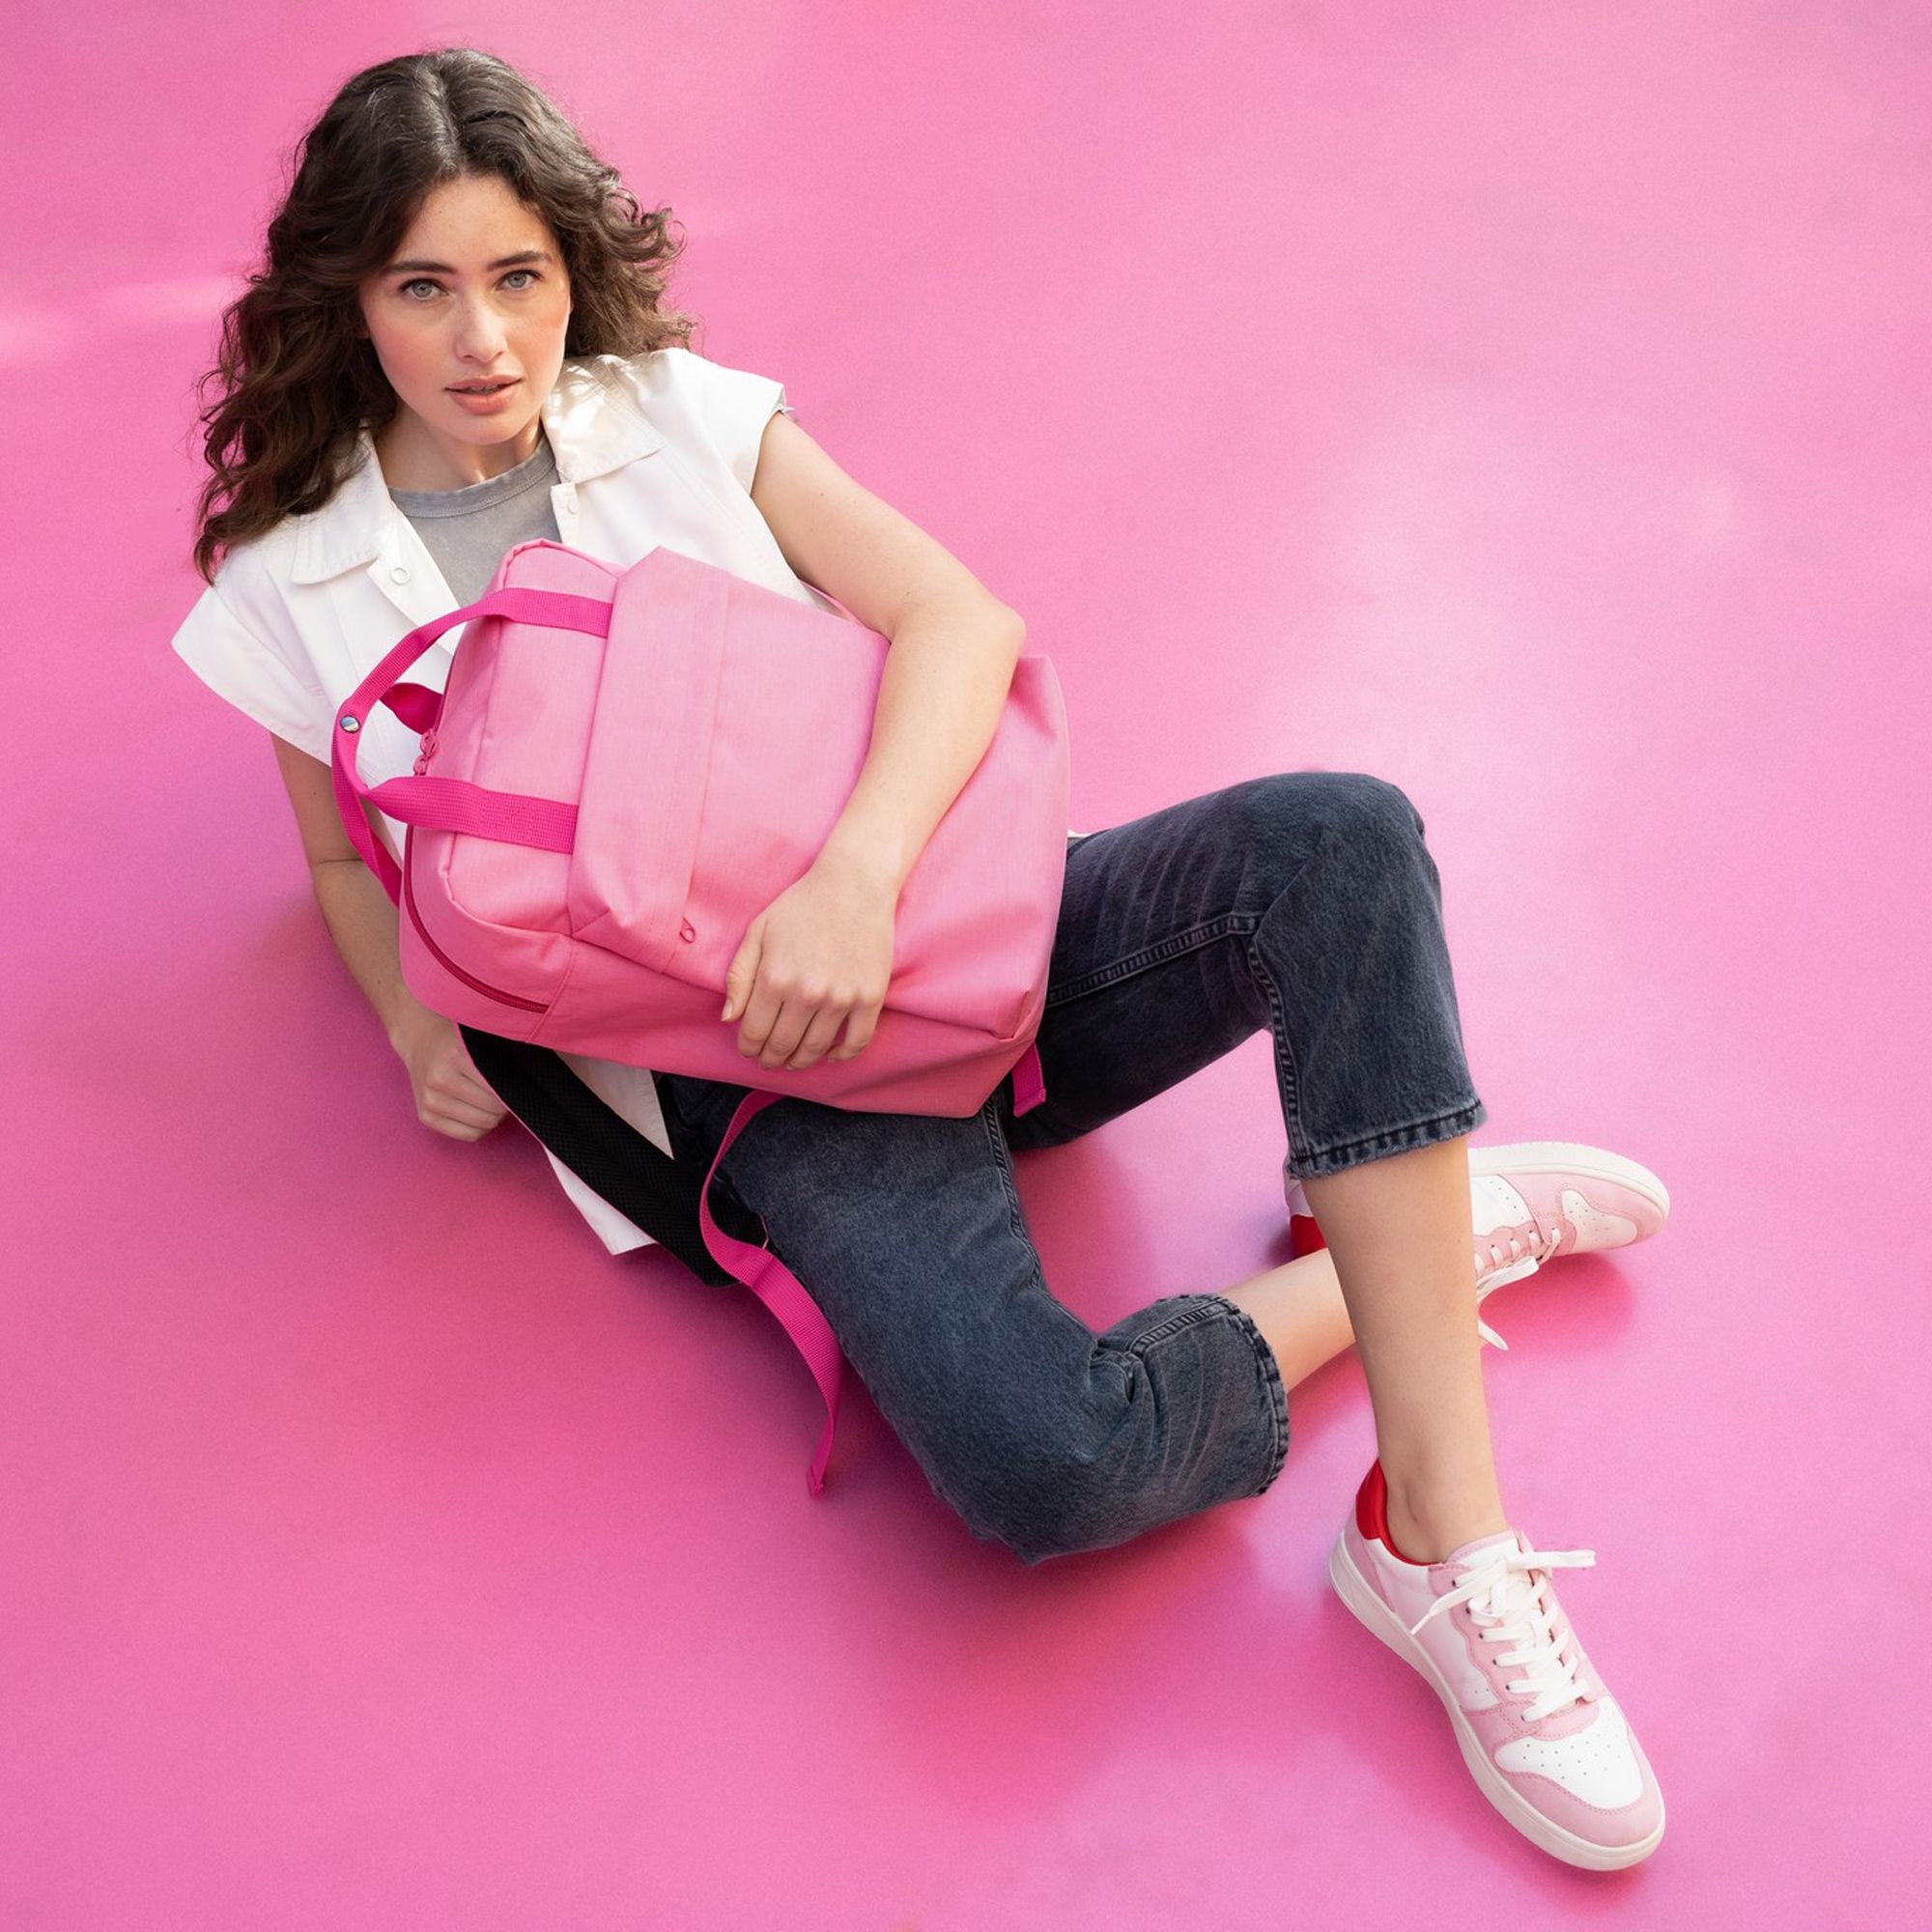 reisenthel - allday backpack m - twist pink